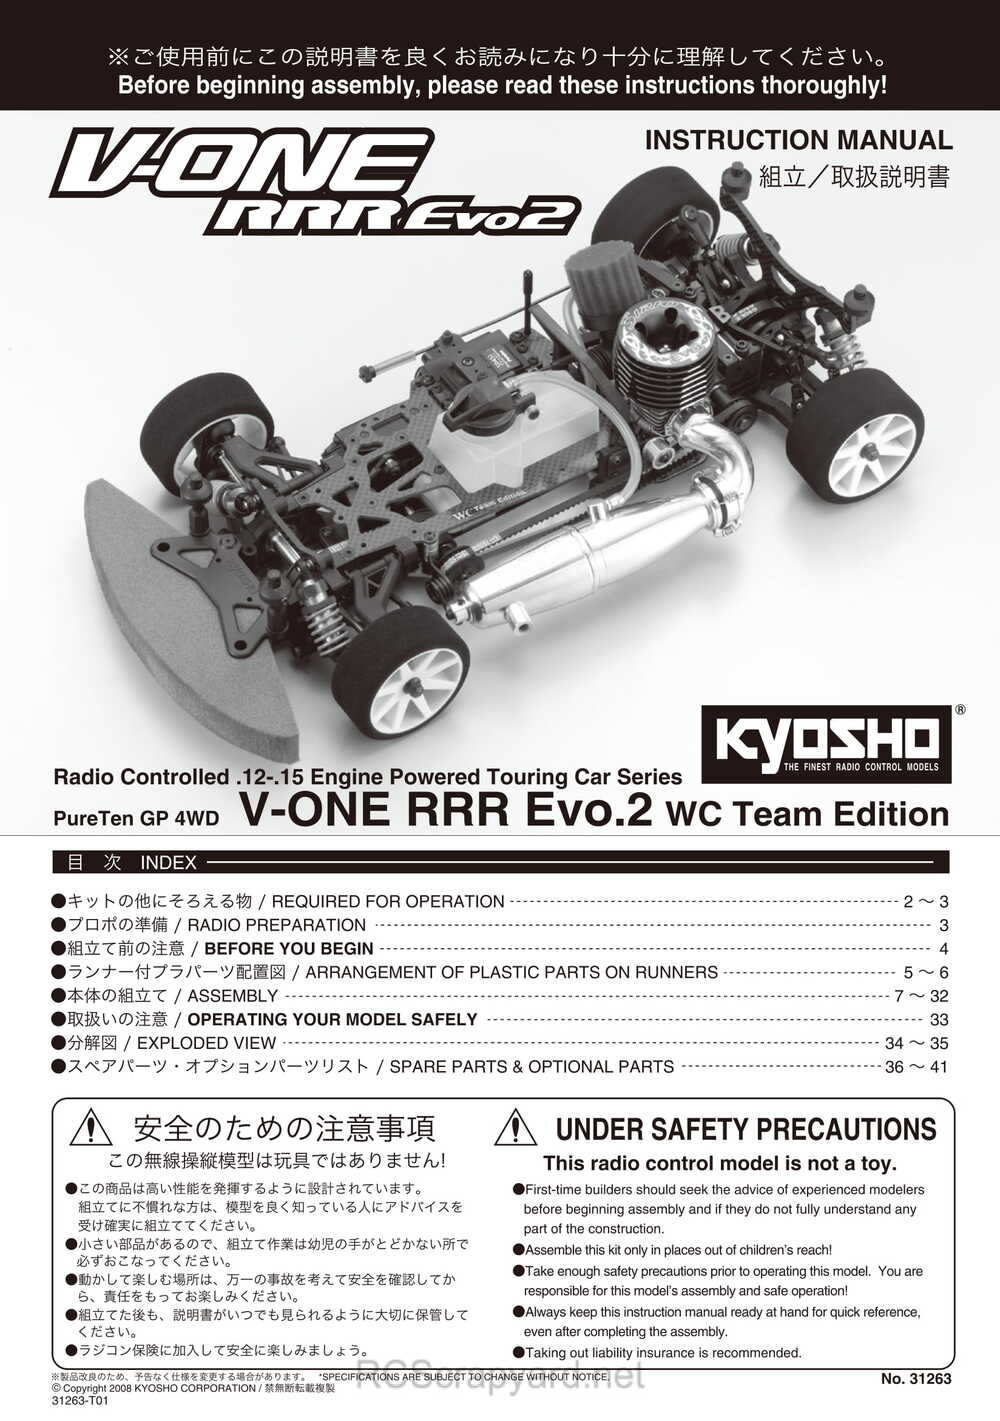 Kyosho - 31263 - V-One RRR Evo2 WC - Manual - Page 01